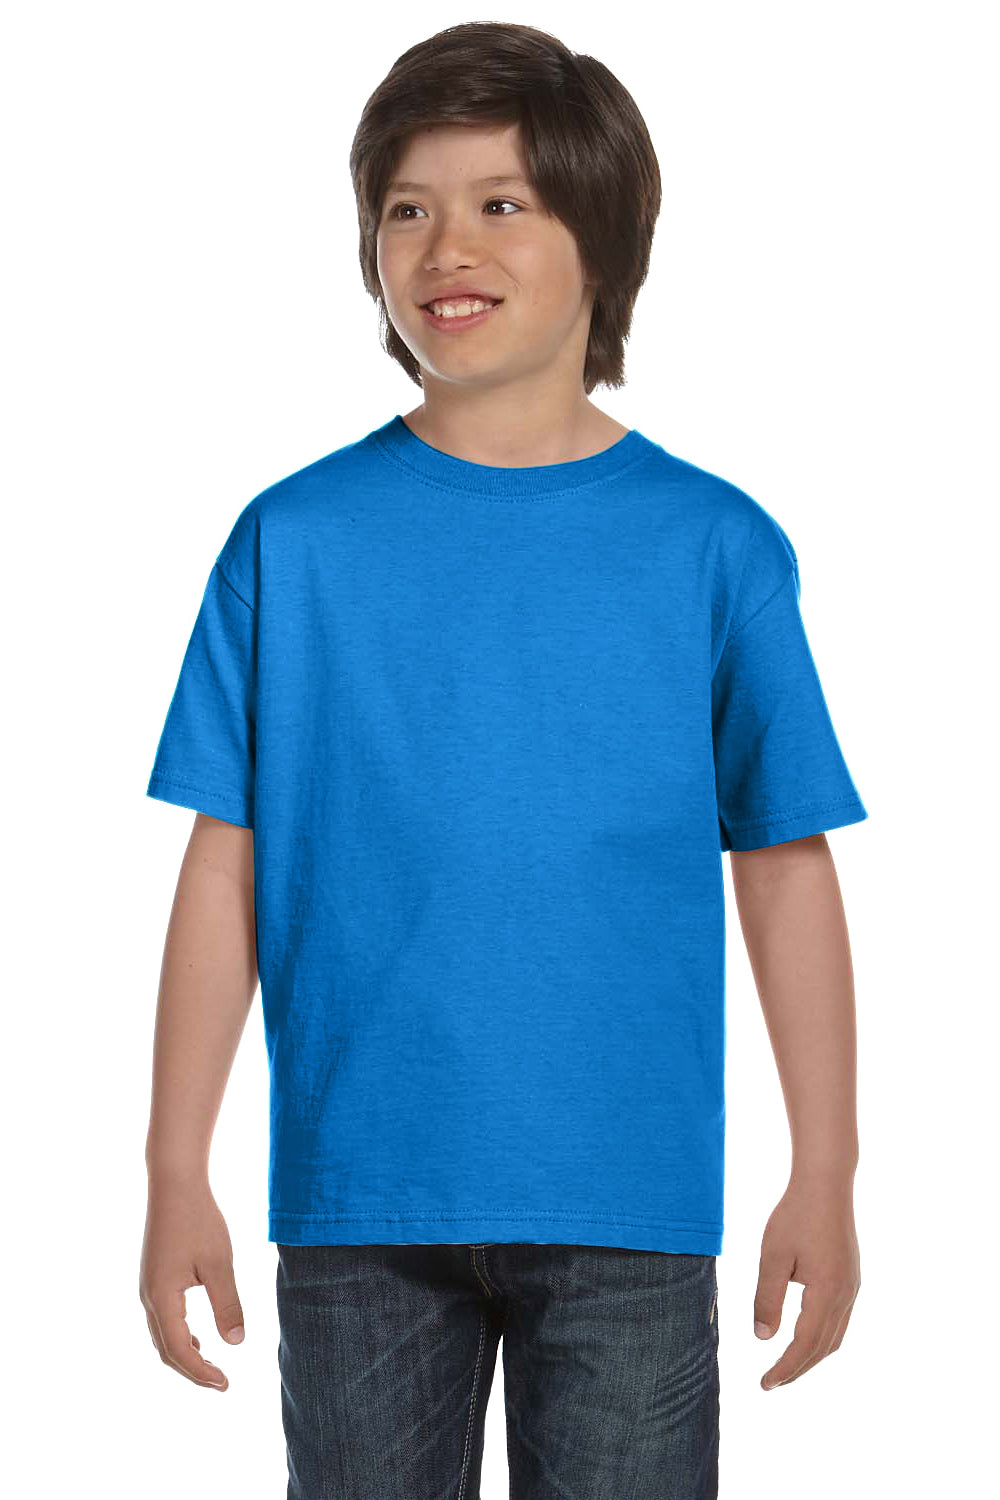 Hanes 5480 ComfortSoft Short Sleeve Crewneck T-Shirt Breeze Blue Front